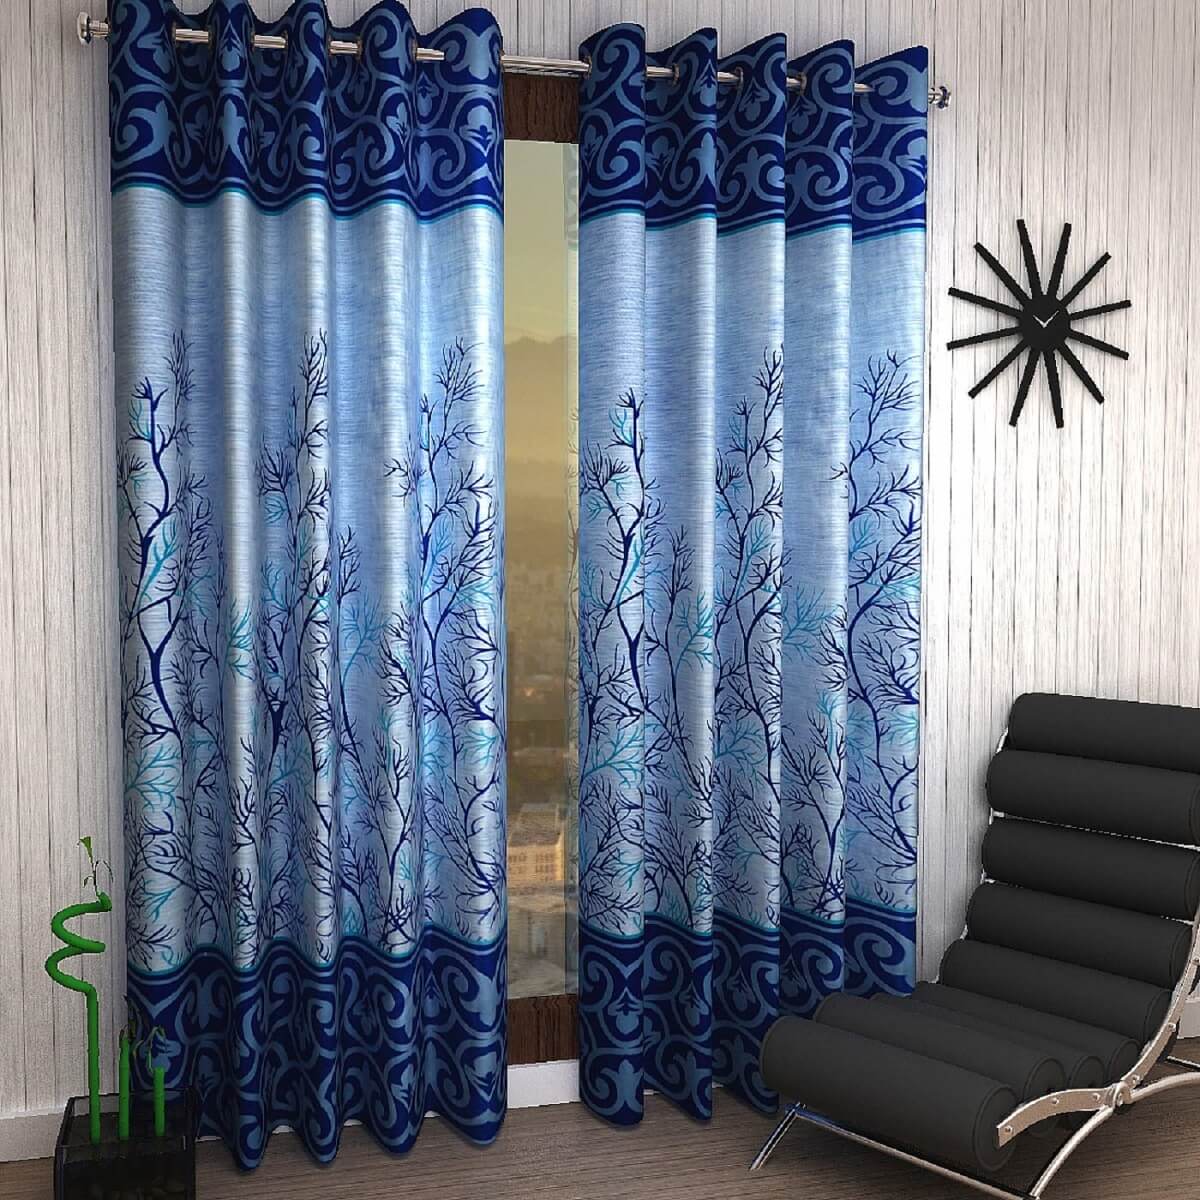 6 Best Window Curtain Designs in Sri Lanka 2022 - DM Interior Studio